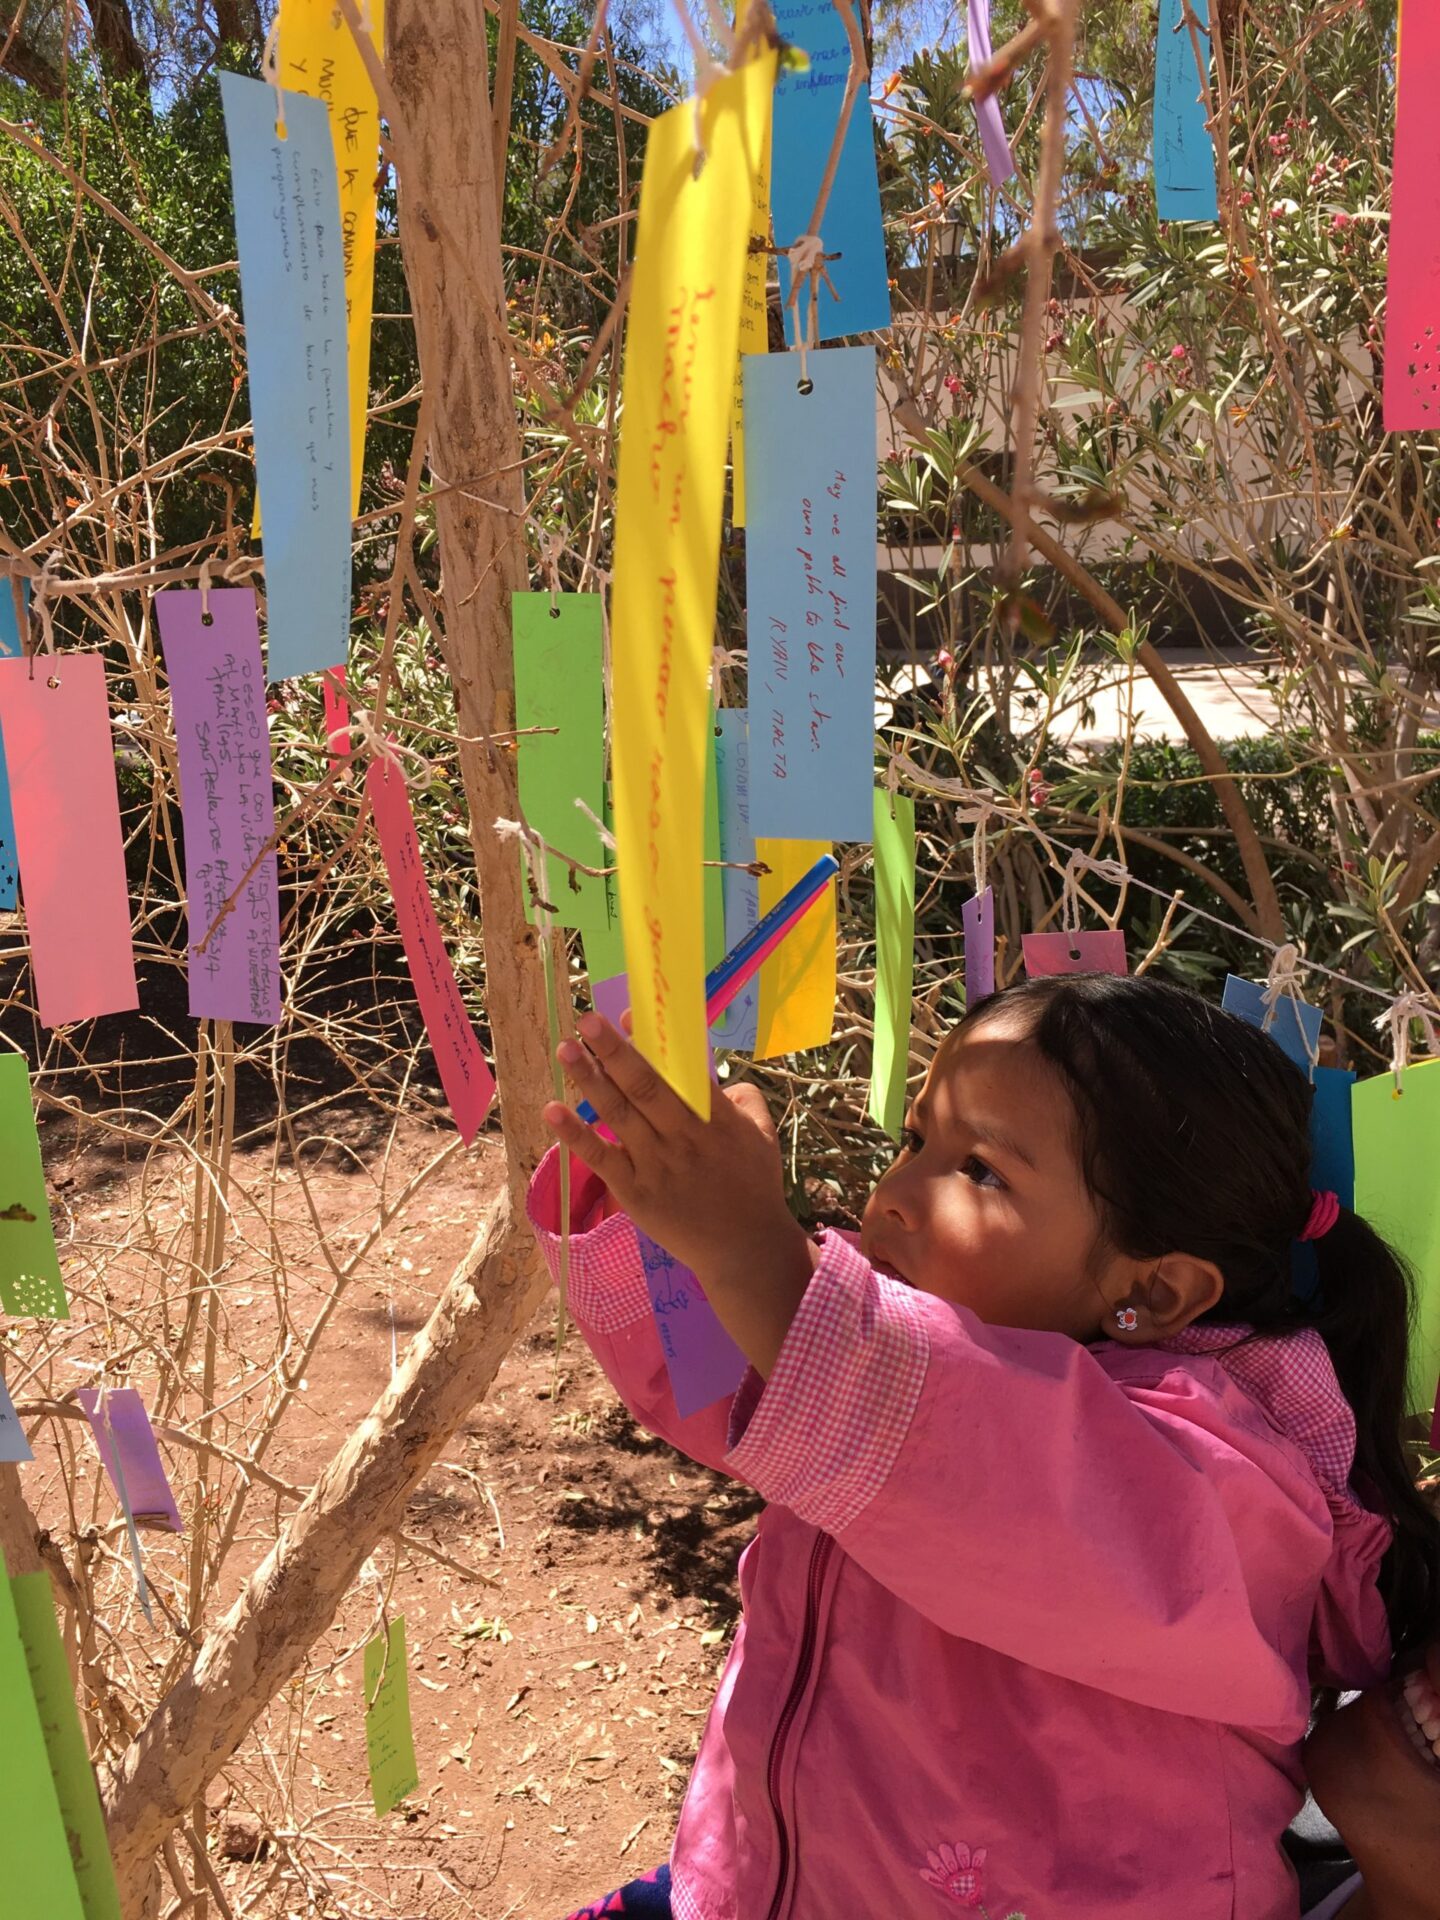 The Japanese Tanabata Festival